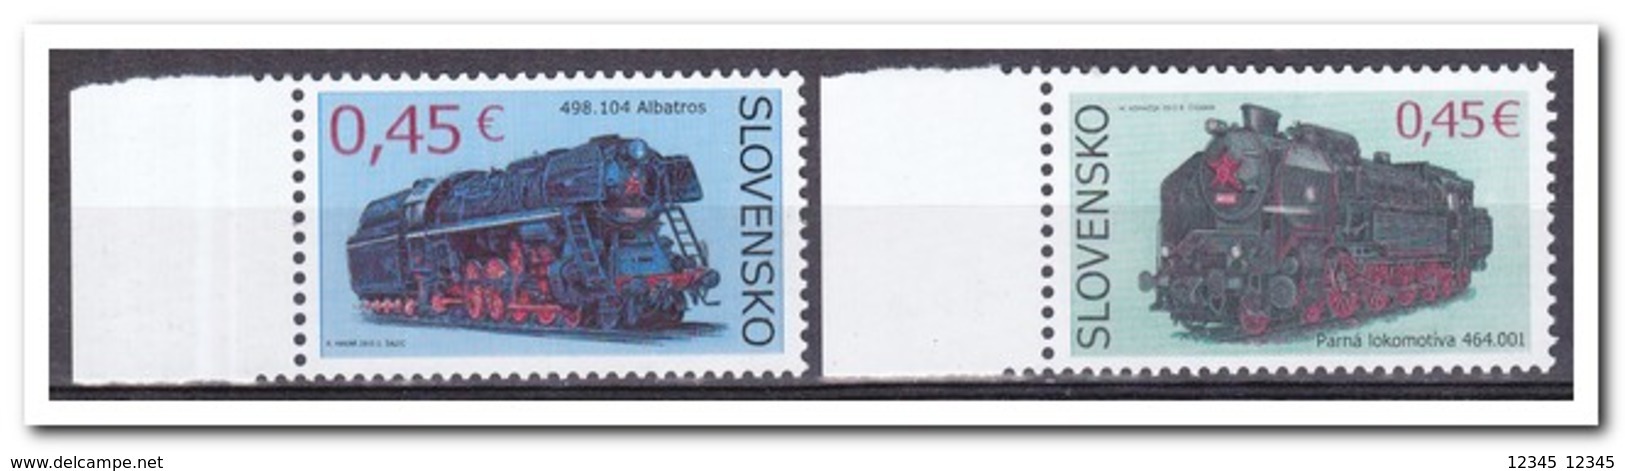 Slowakije 2014, Postfris MNH, Trains - Unused Stamps